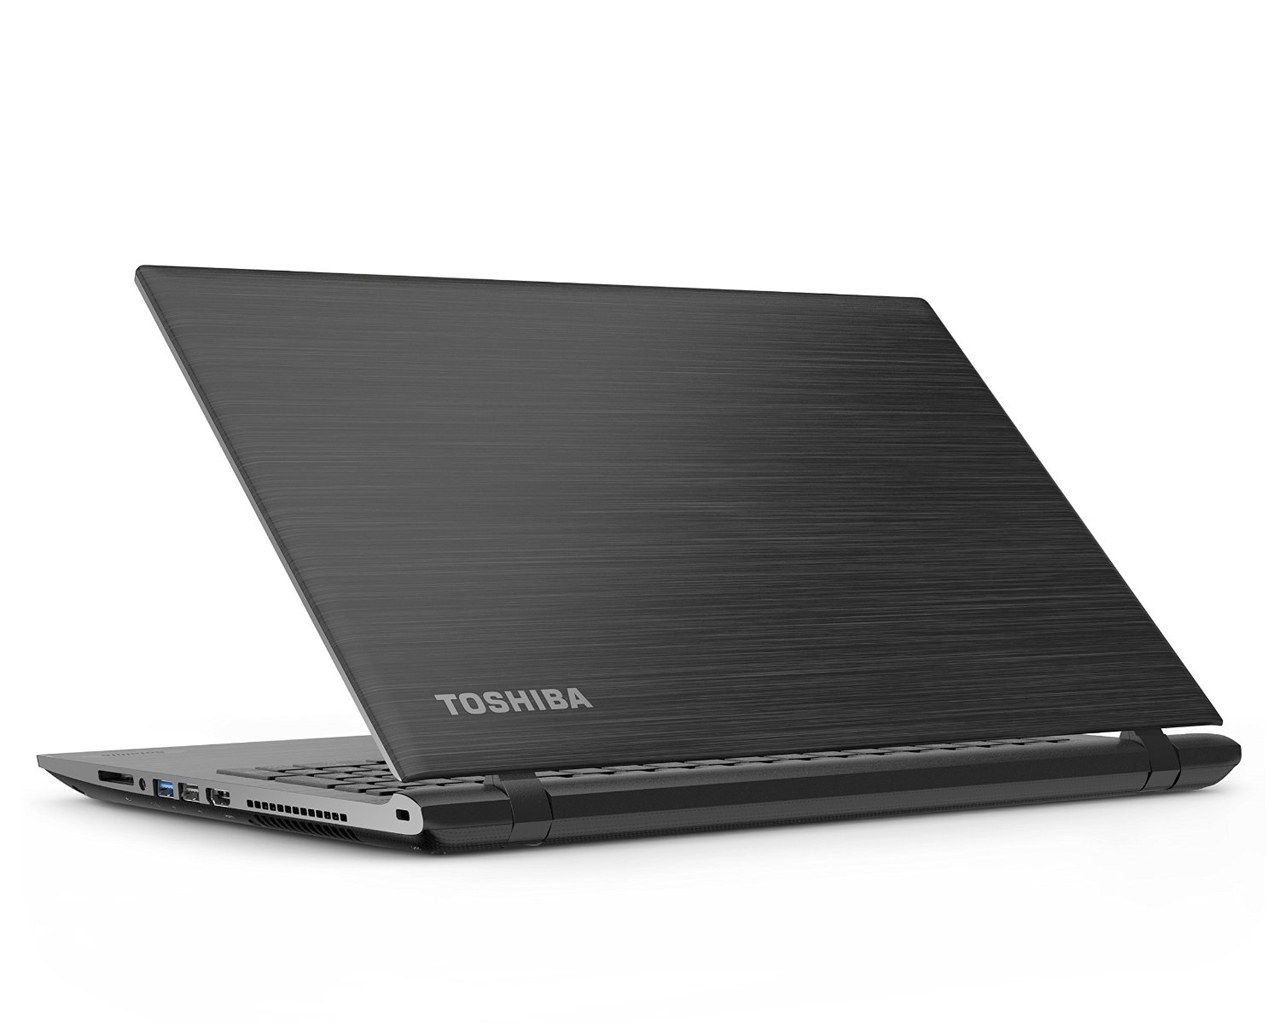 Toshiba Satellite C50 Series - Notebookcheck.net External Reviews